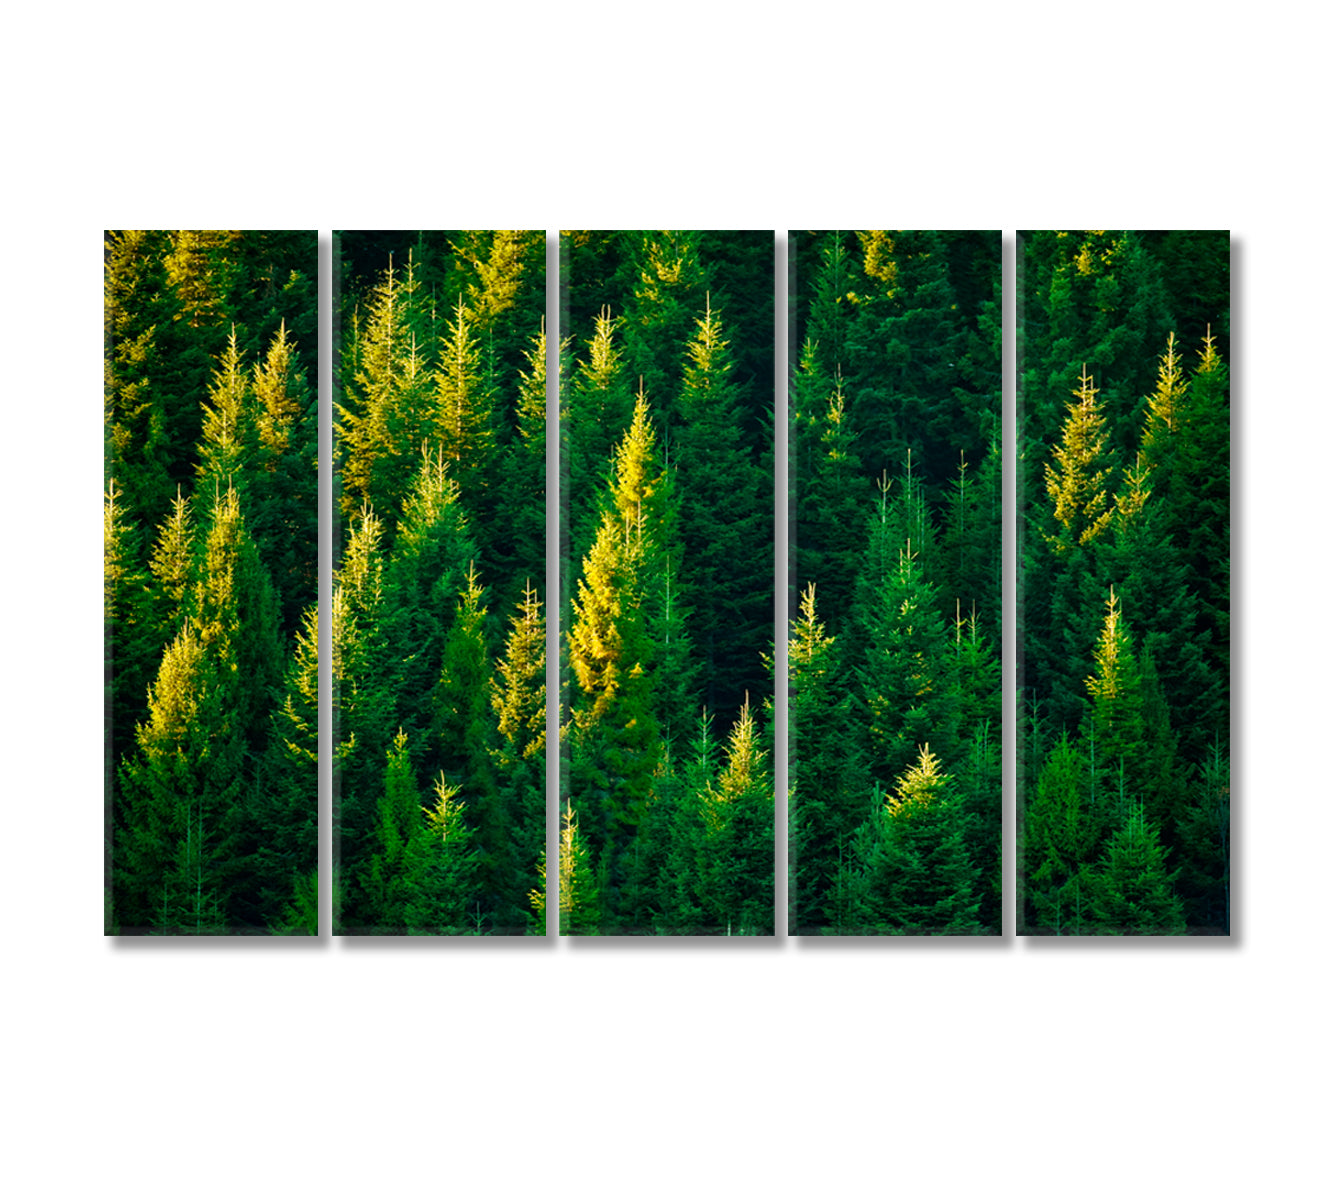 Summer Spruce Forest Canvas Print-Canvas Print-CetArt-5 Panels-36x24 inches-CetArt